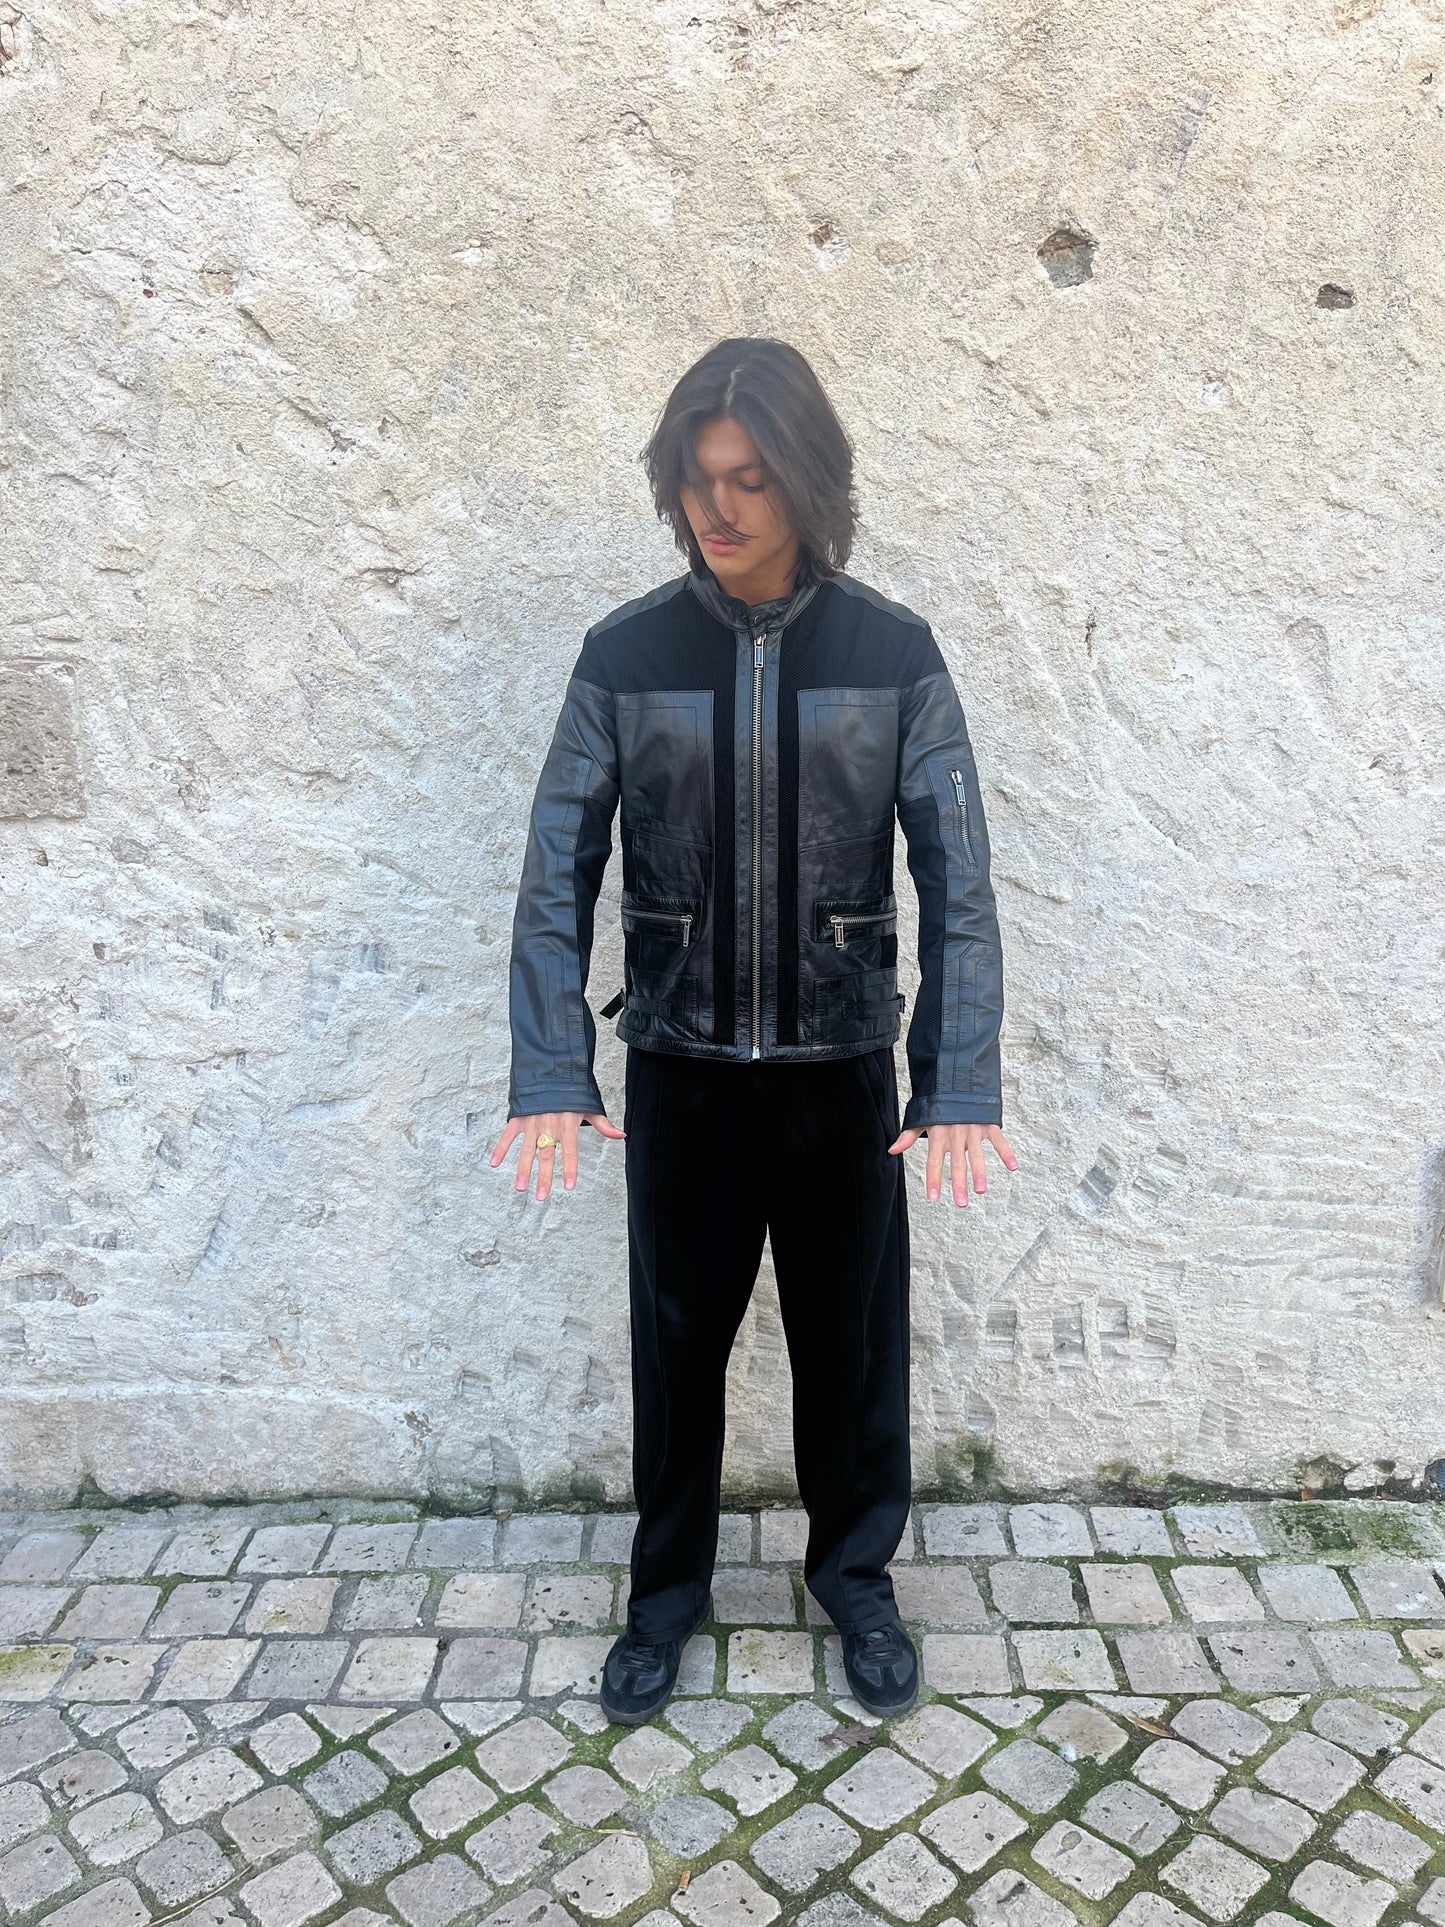 00s Dirk Bikkembergs Black Hybrid Leather Jacket (L)